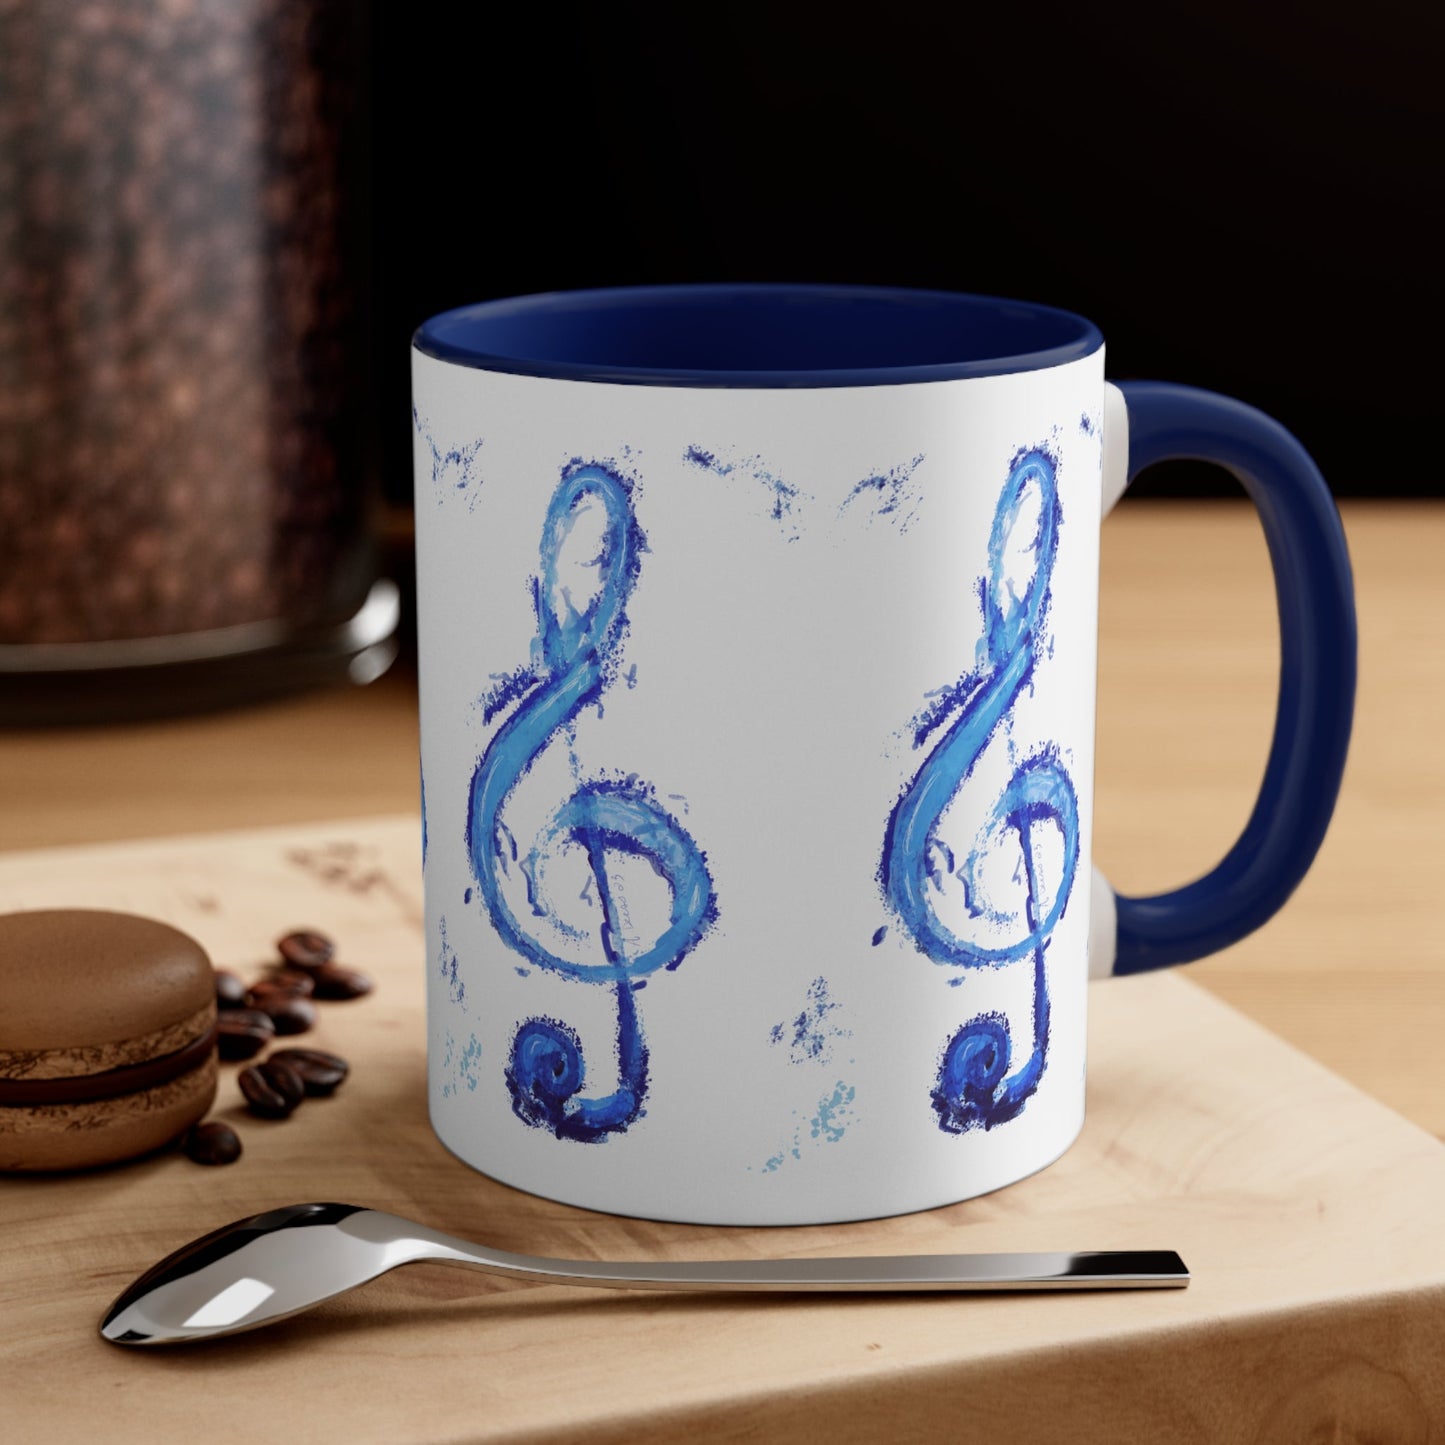 Music Note Accent Coffee Mug, 11oz - Blue Cava